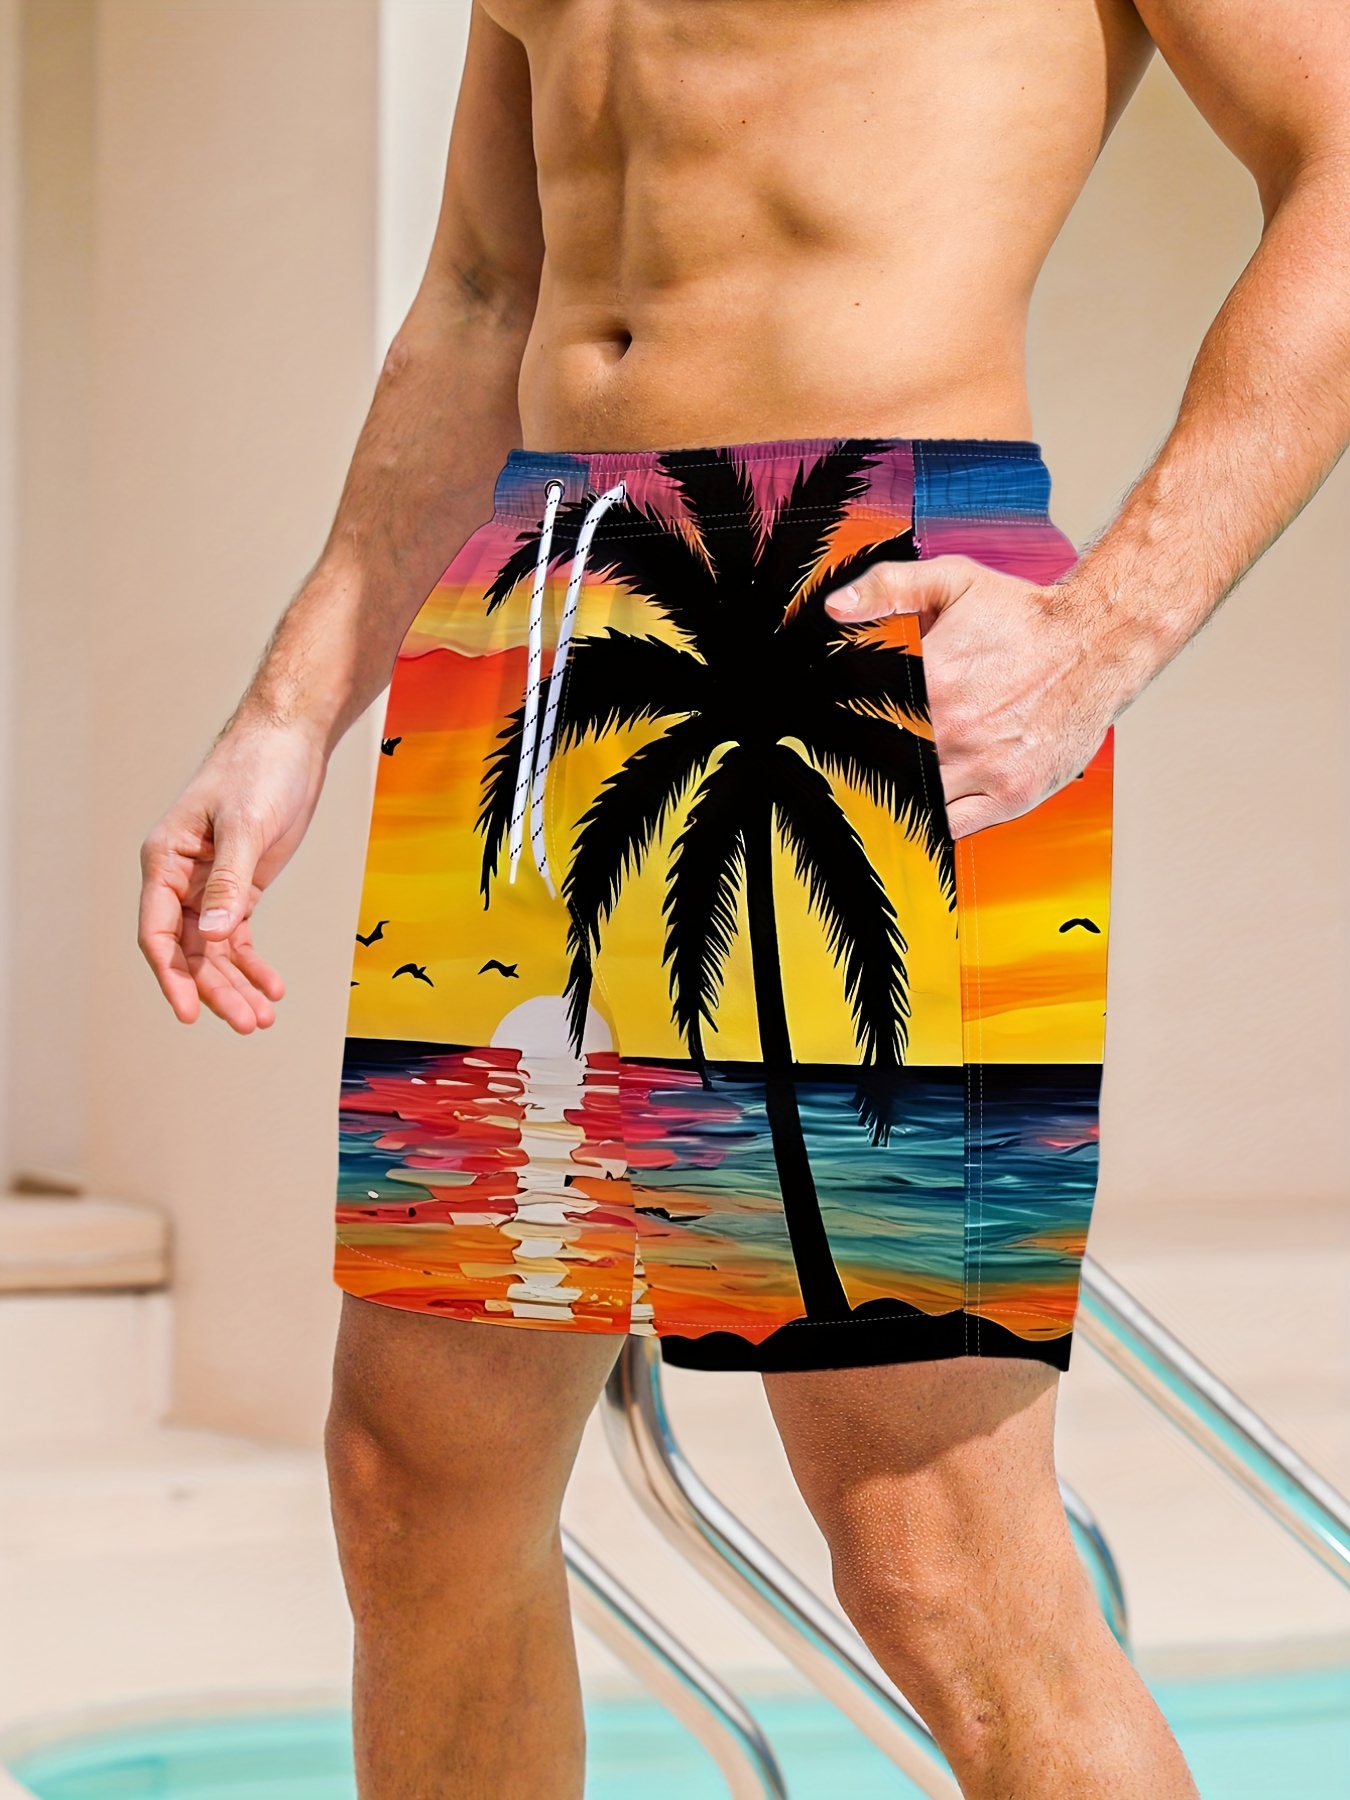 Palm Tree Print Quick Dry Summer Mens Siwmwear Beach Board Shorts